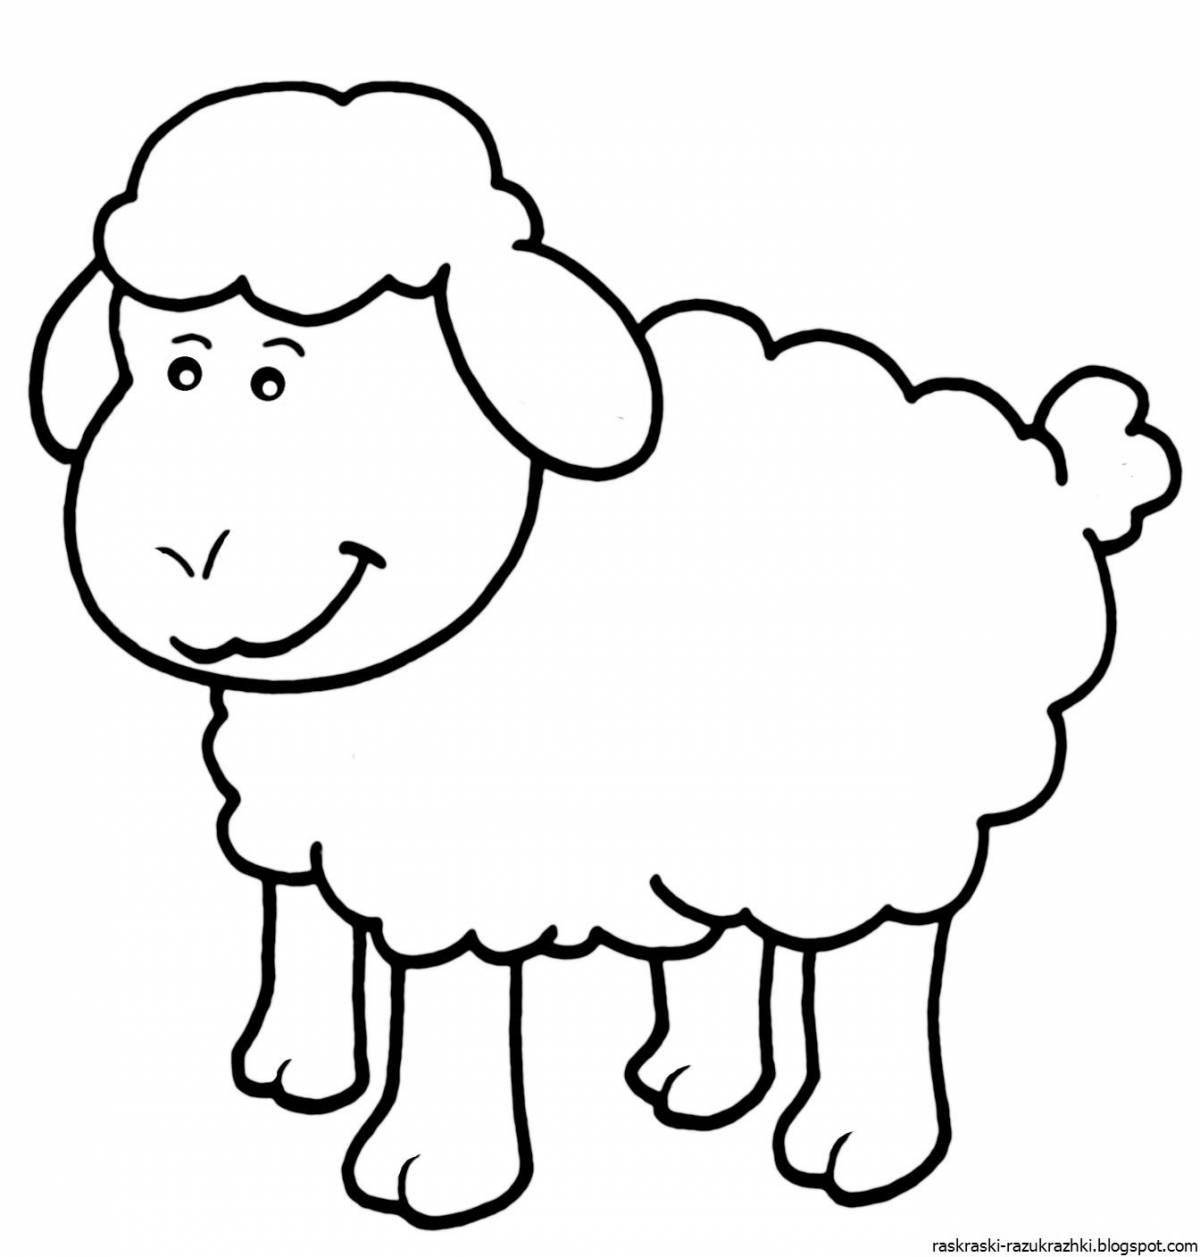 Violent coloring book lamb for kids